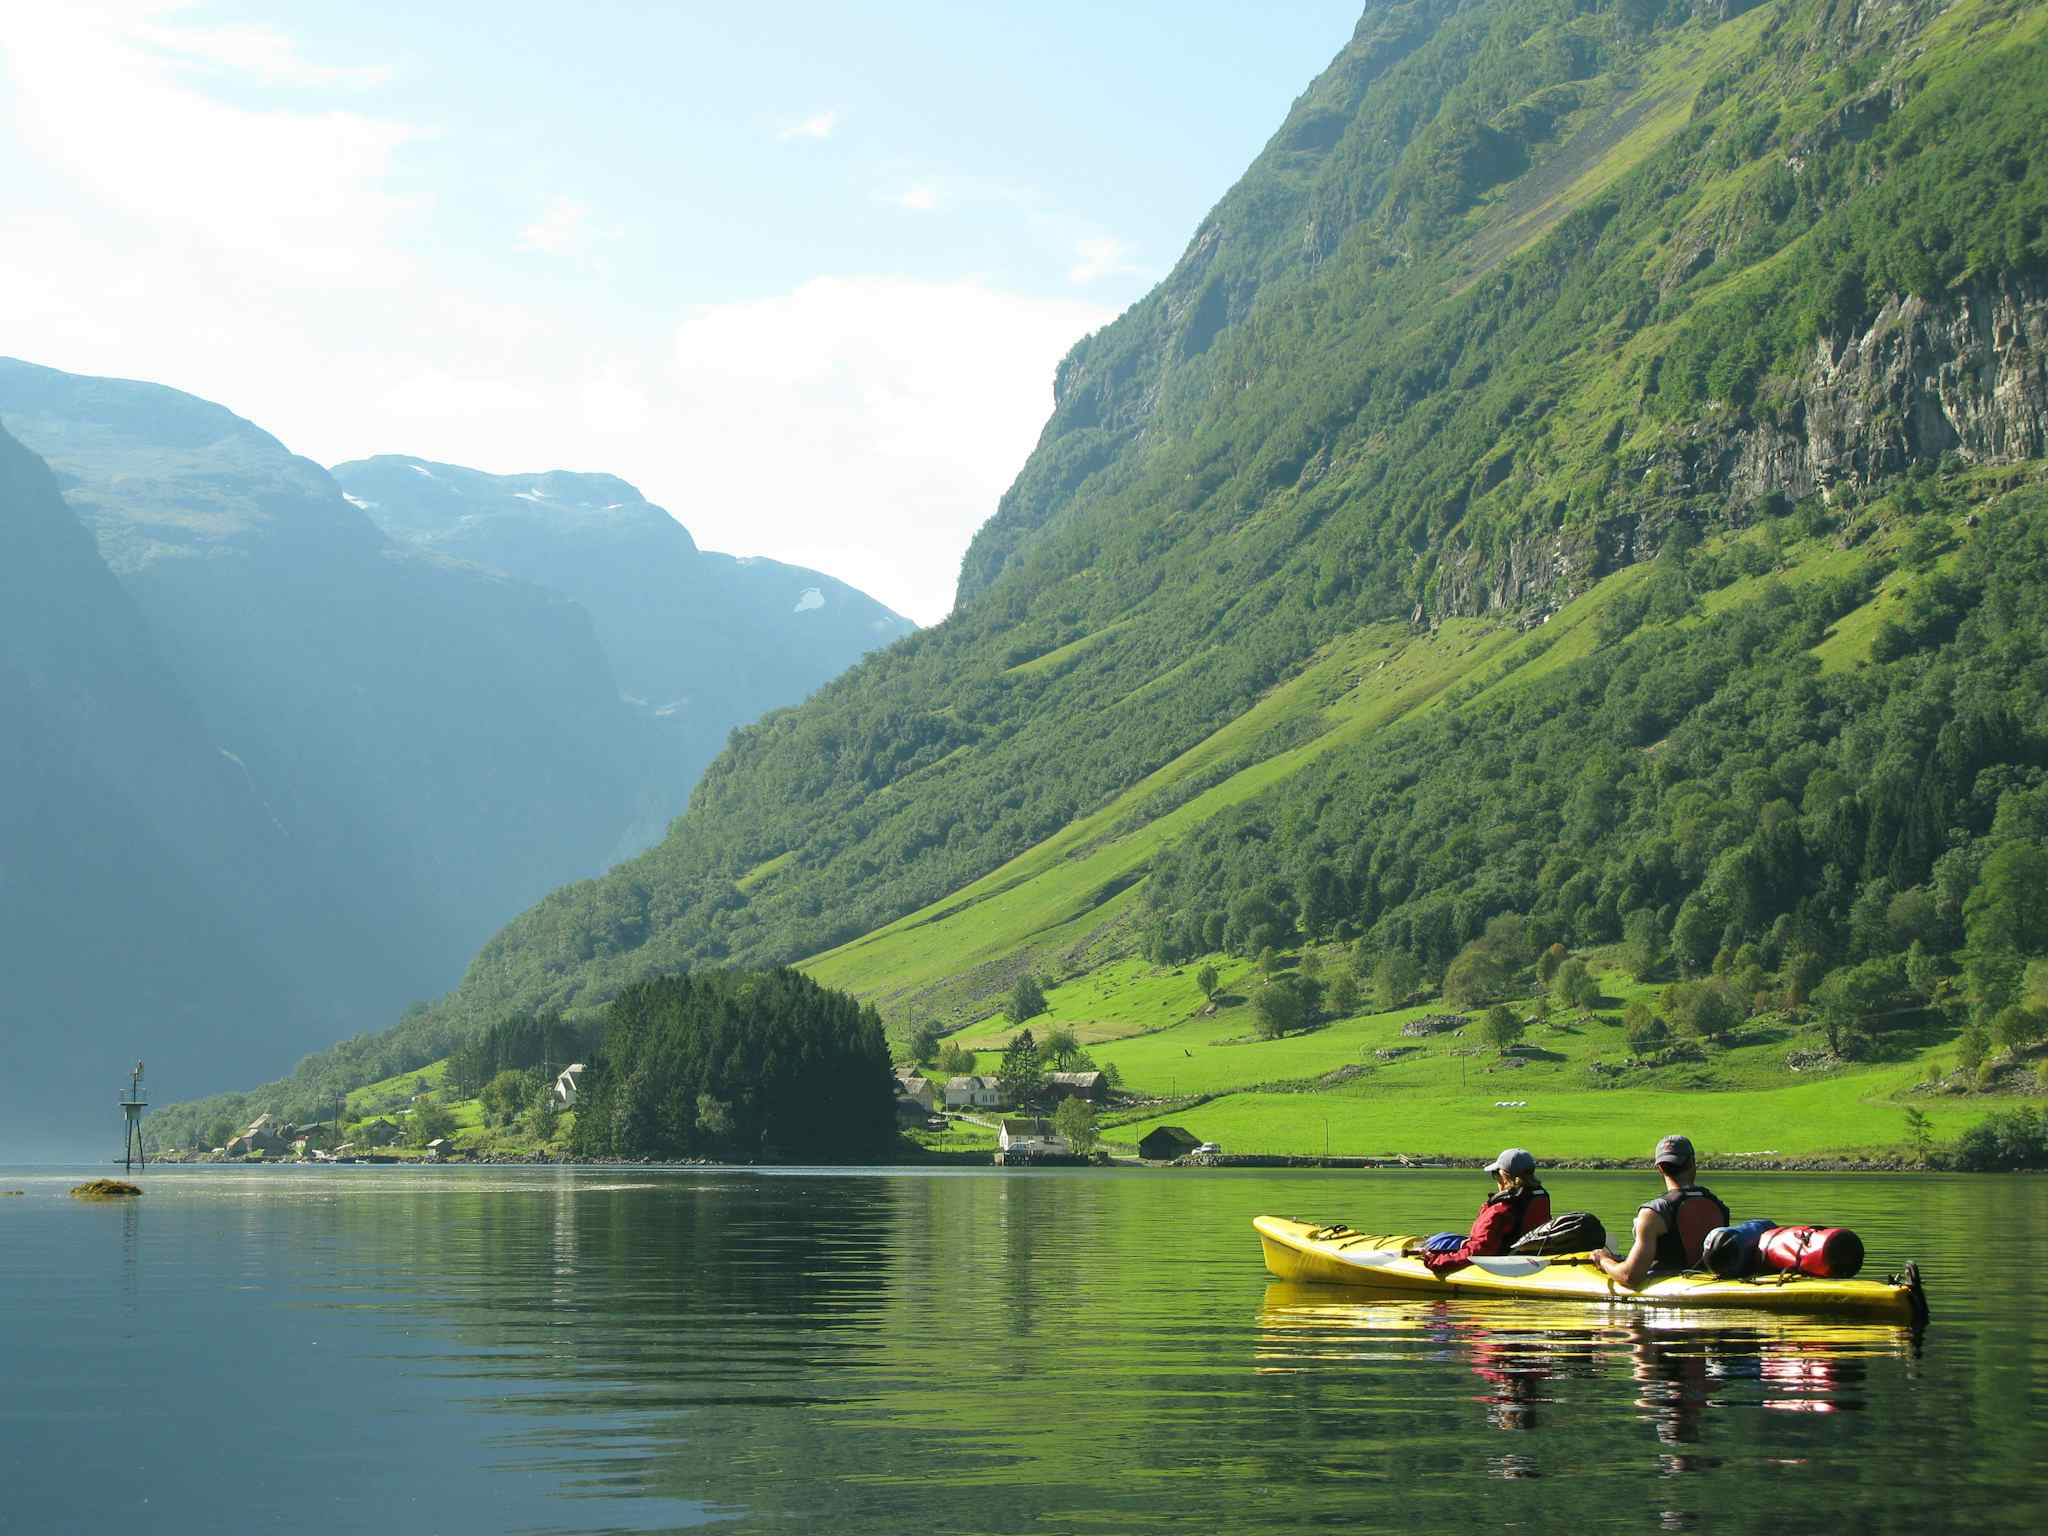 Kayaking the Nærøyfjord in the Norwegian Fjords on a sunny day.